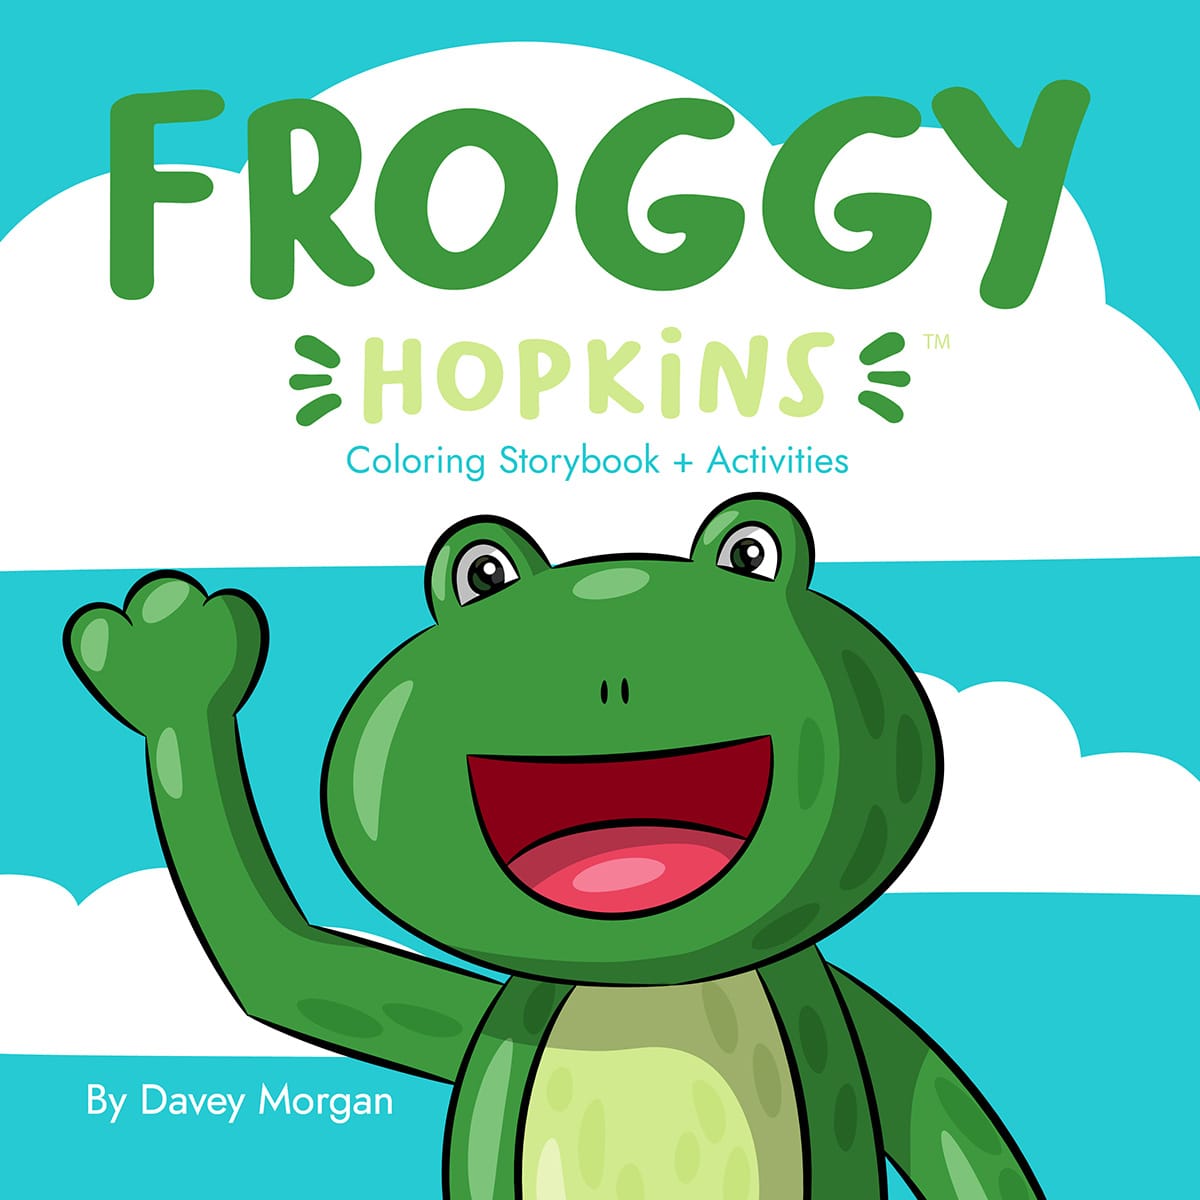 Froggy Hopkins